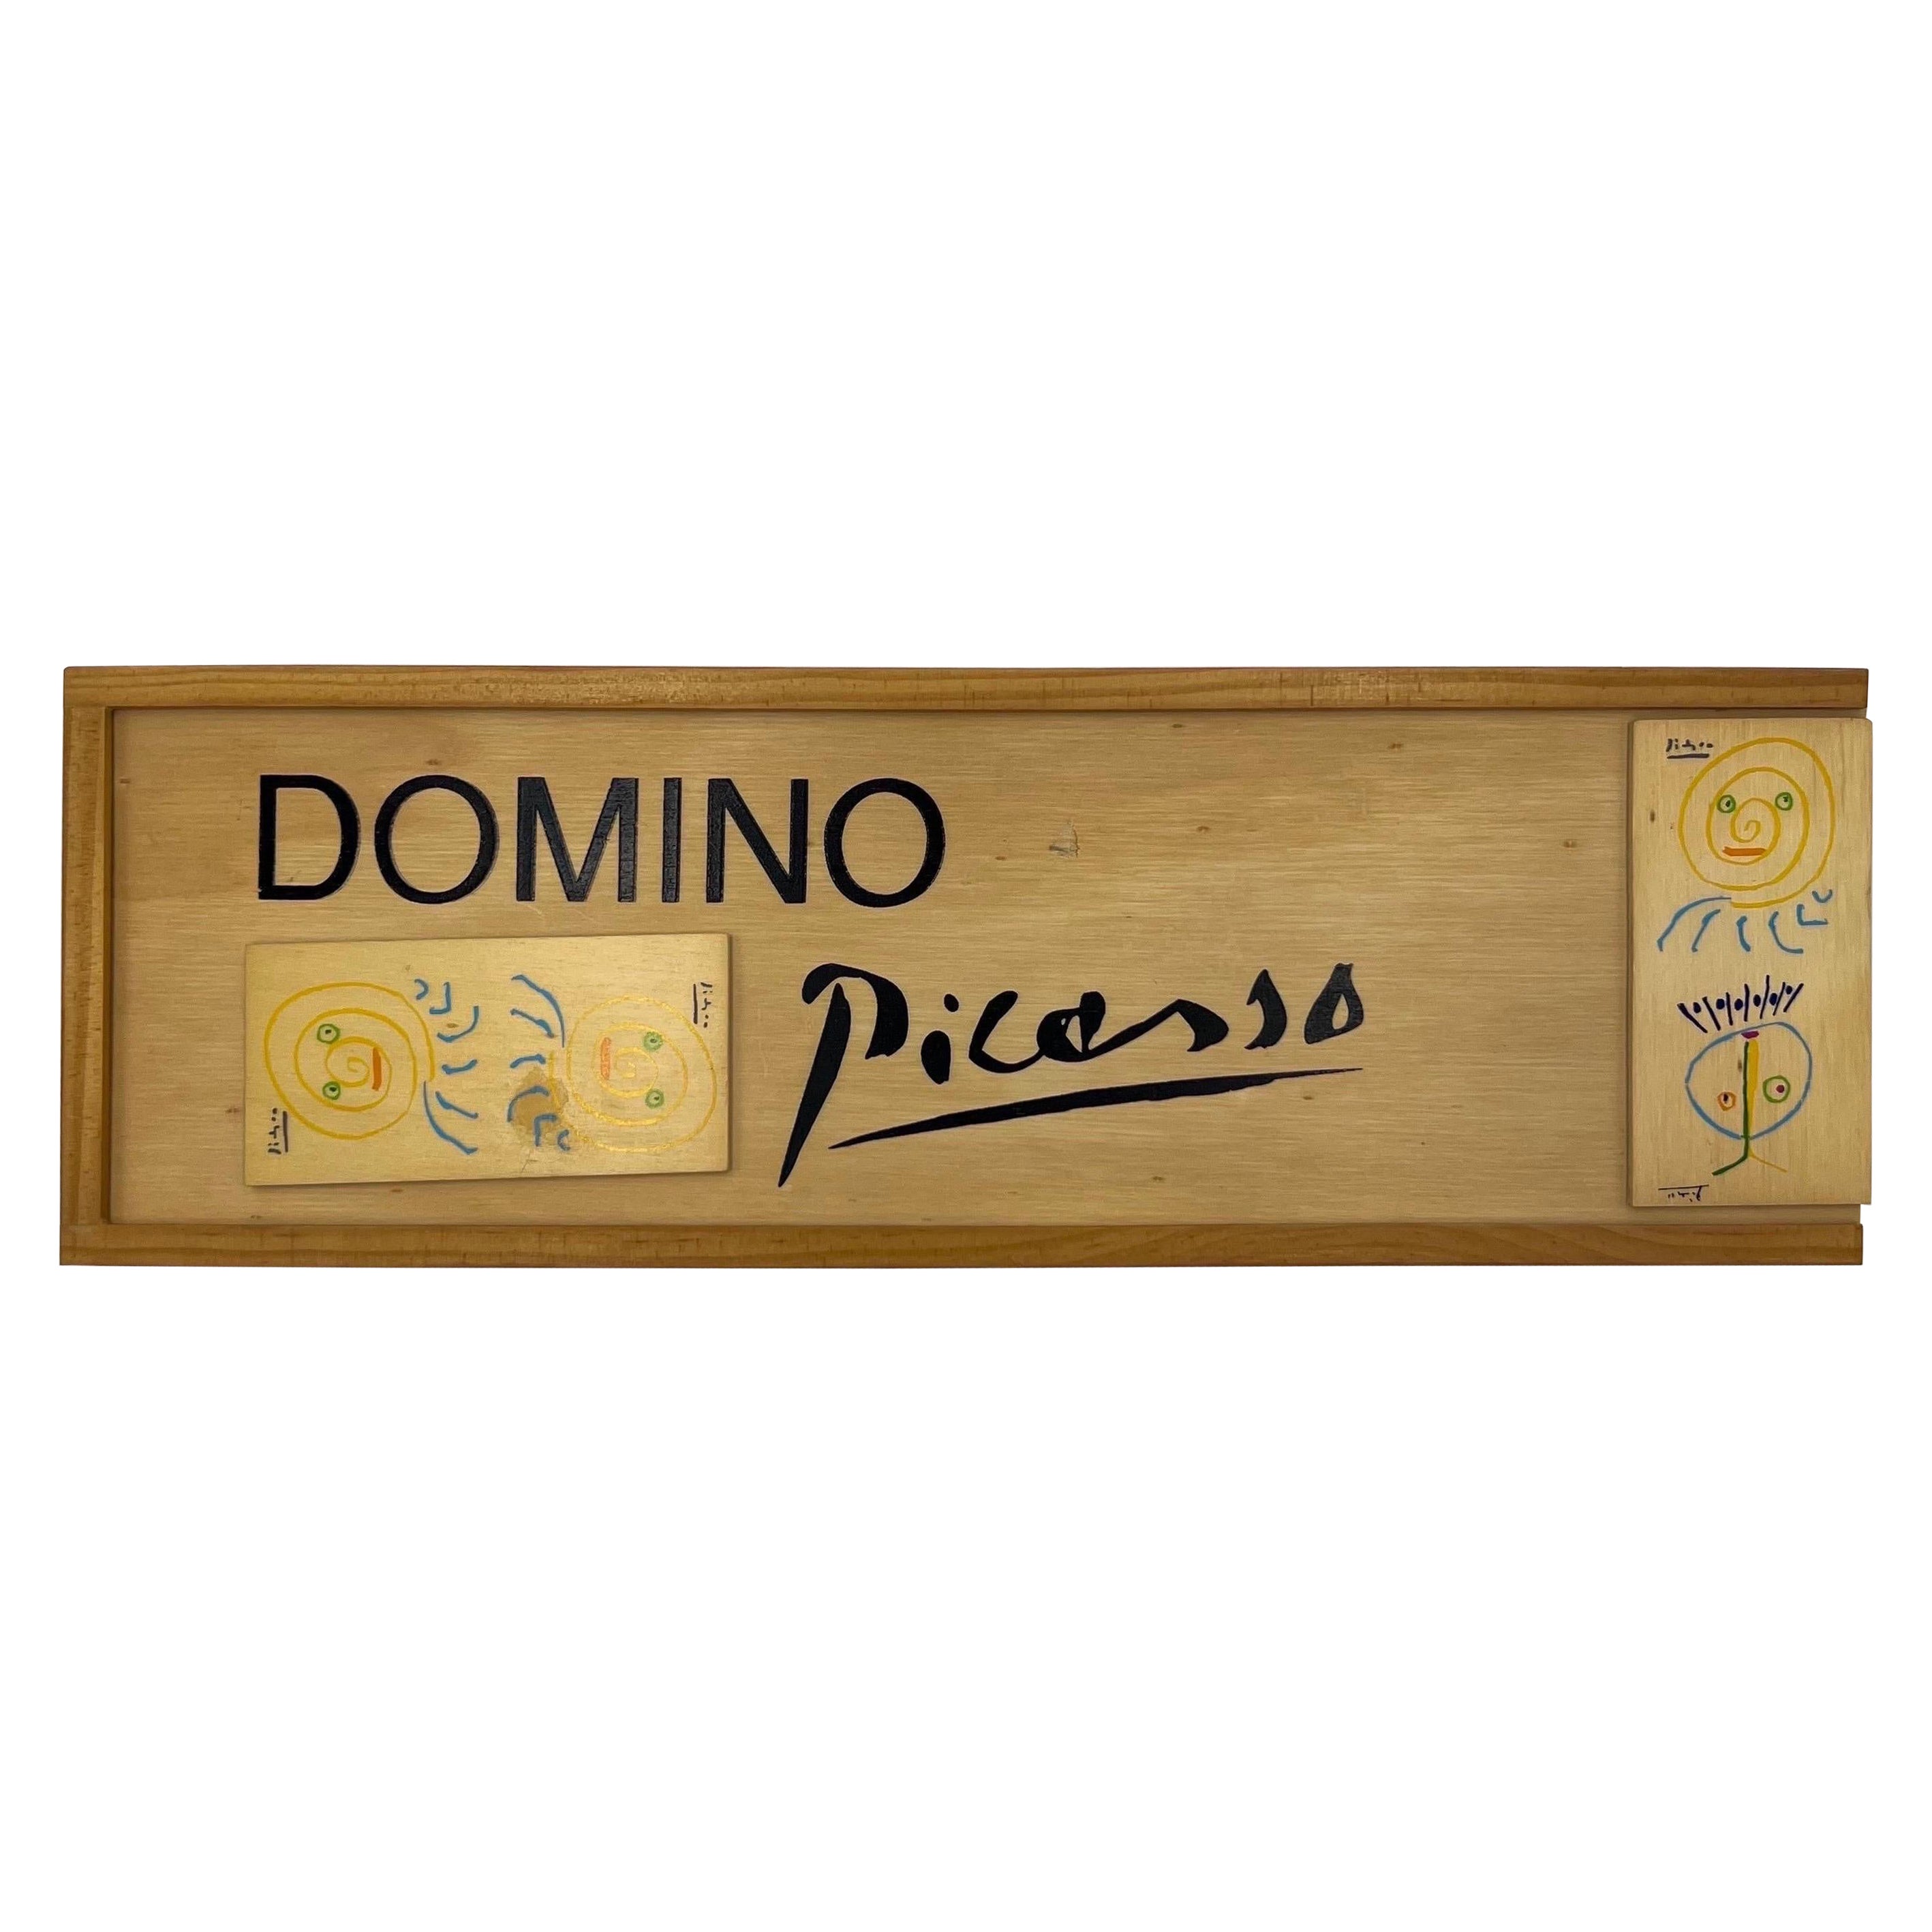 Pablo Picasso Domino "Gavilla de Fabulas sin Amor" Wooden Set, 1960, Complete